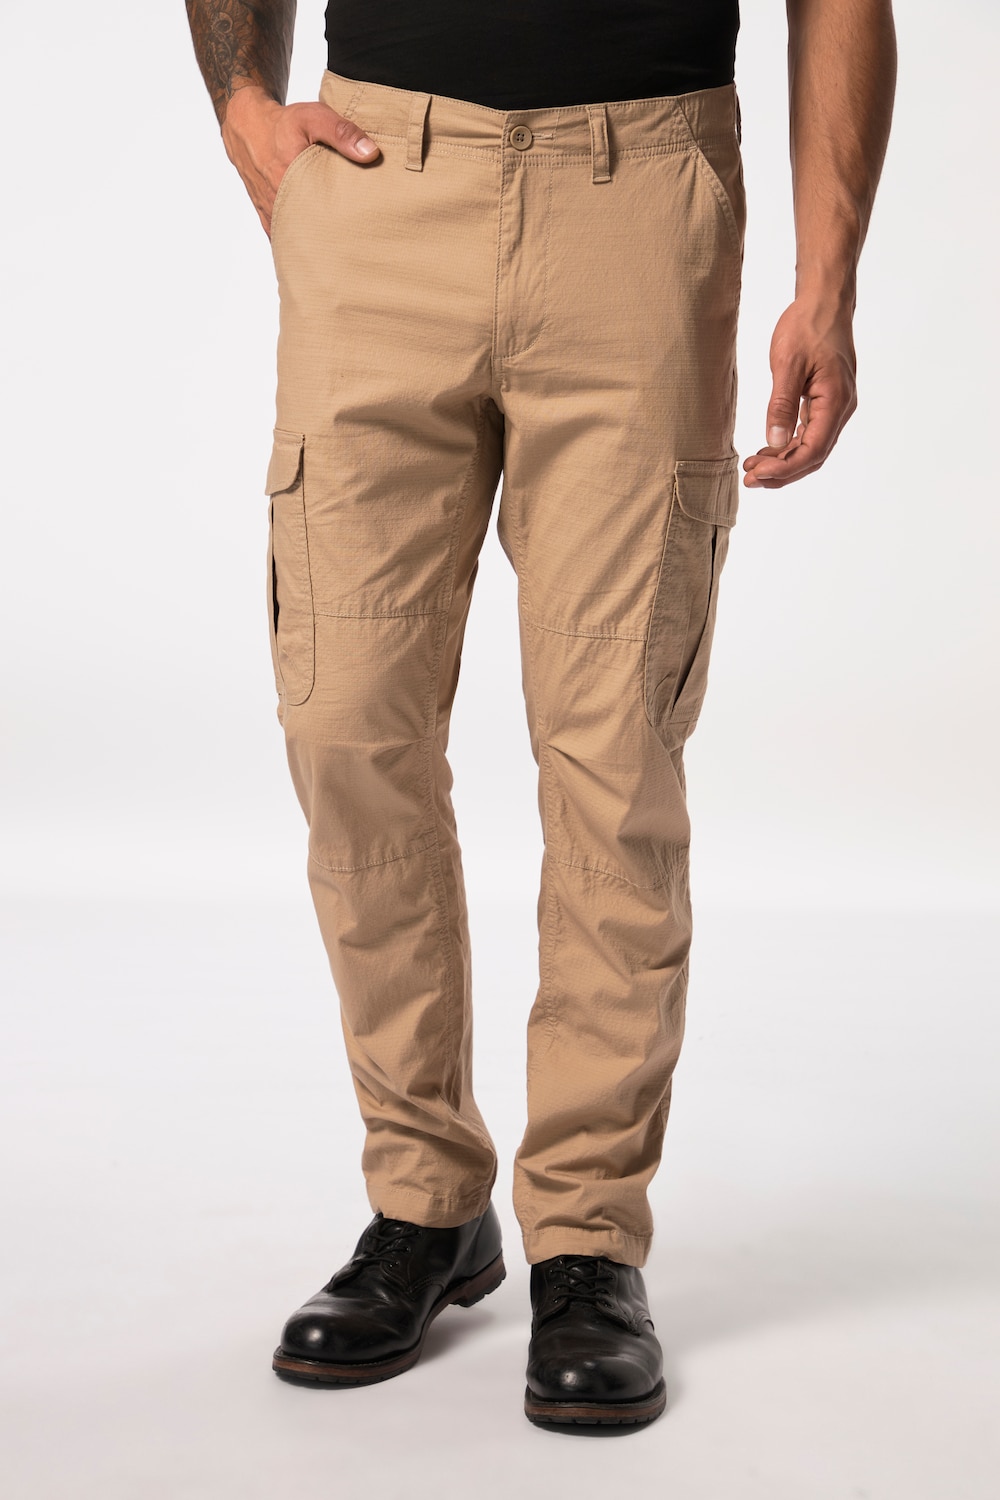 grandes tailles pantalon cargo flexnamic® en ripstop, hommes, marron, taille: 52, coton, jp1880